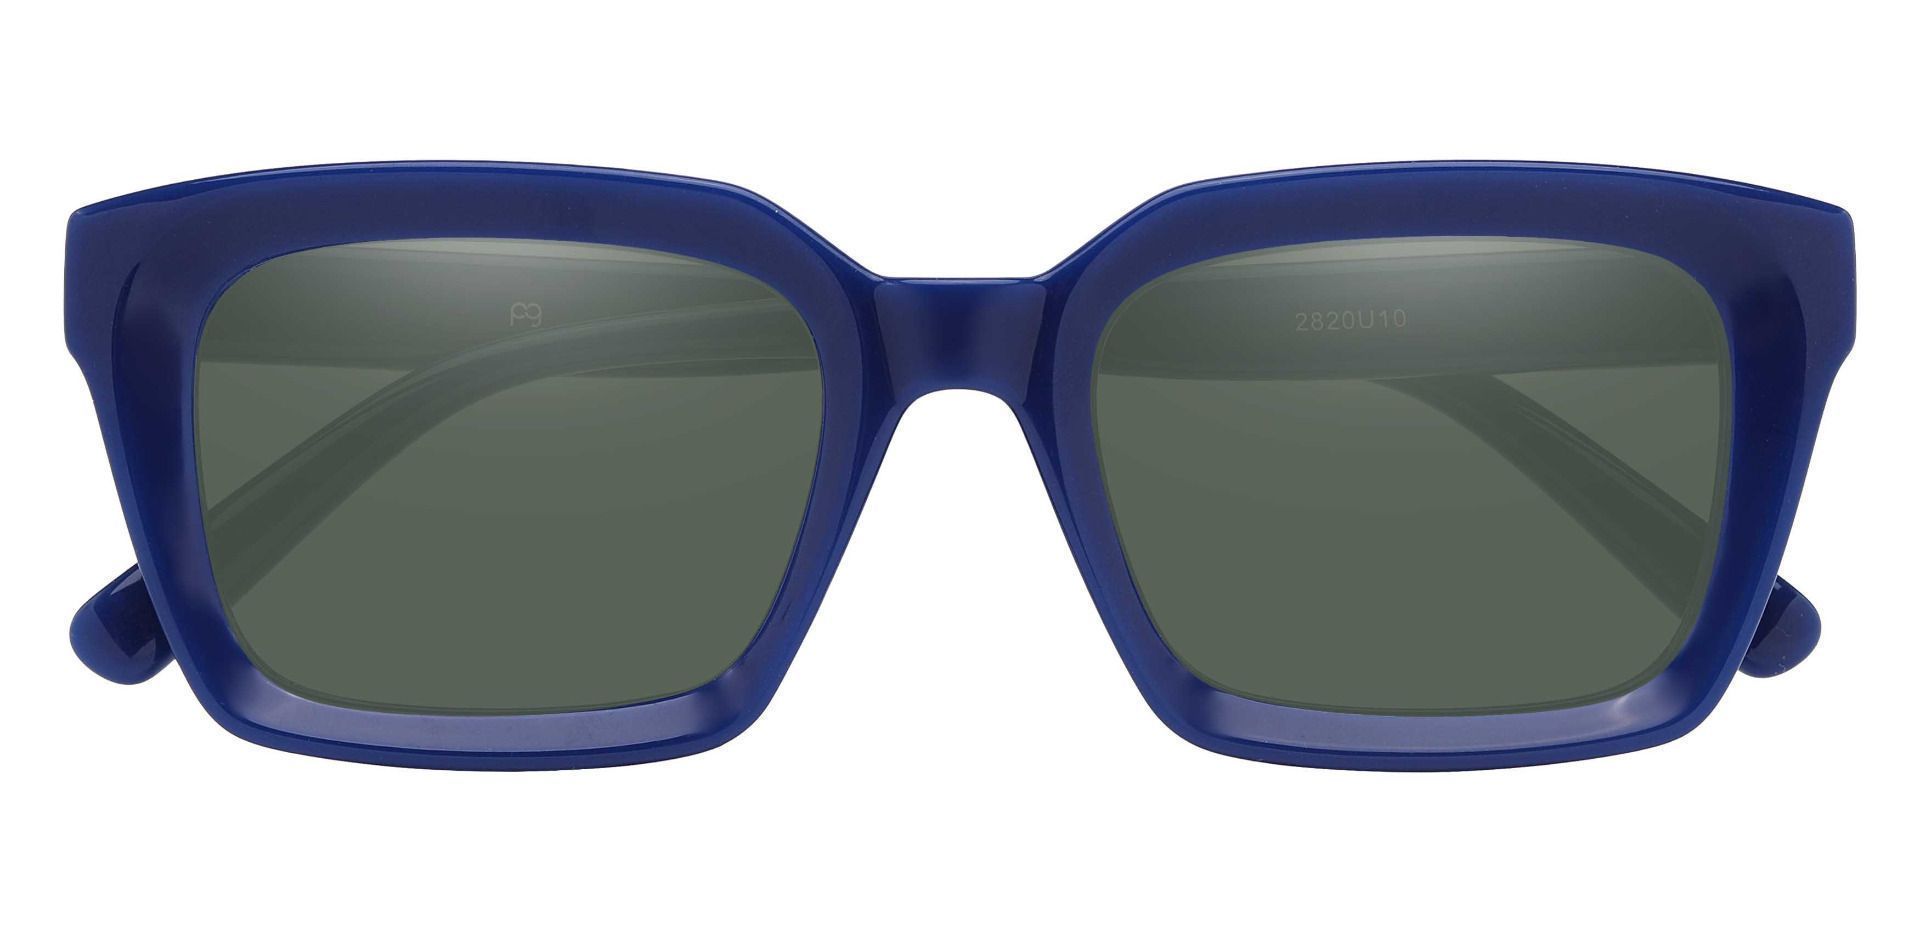 Unity Rectangle Progressive Sunglasses - Blue Frame With Green Lenses